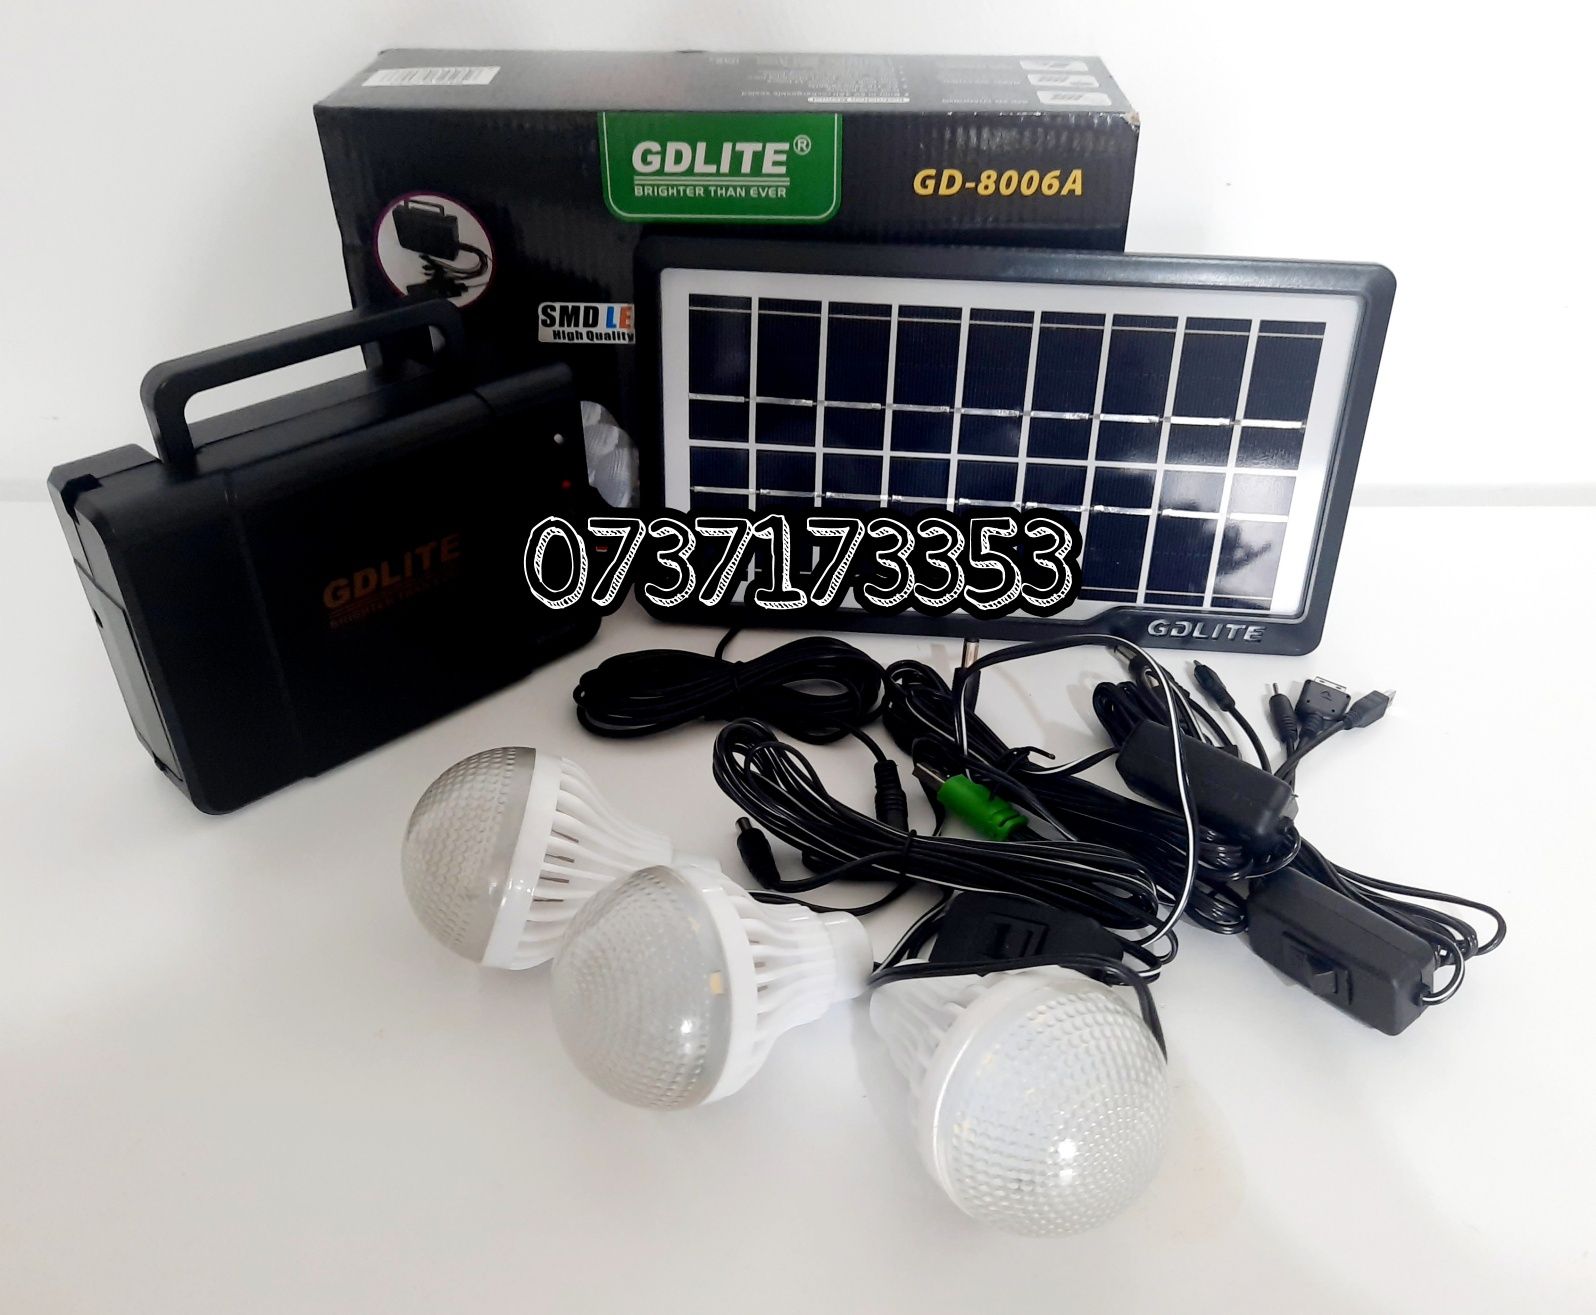 Kit Panou solar de iluminat GD-8006A USB 3 bec LED NOU